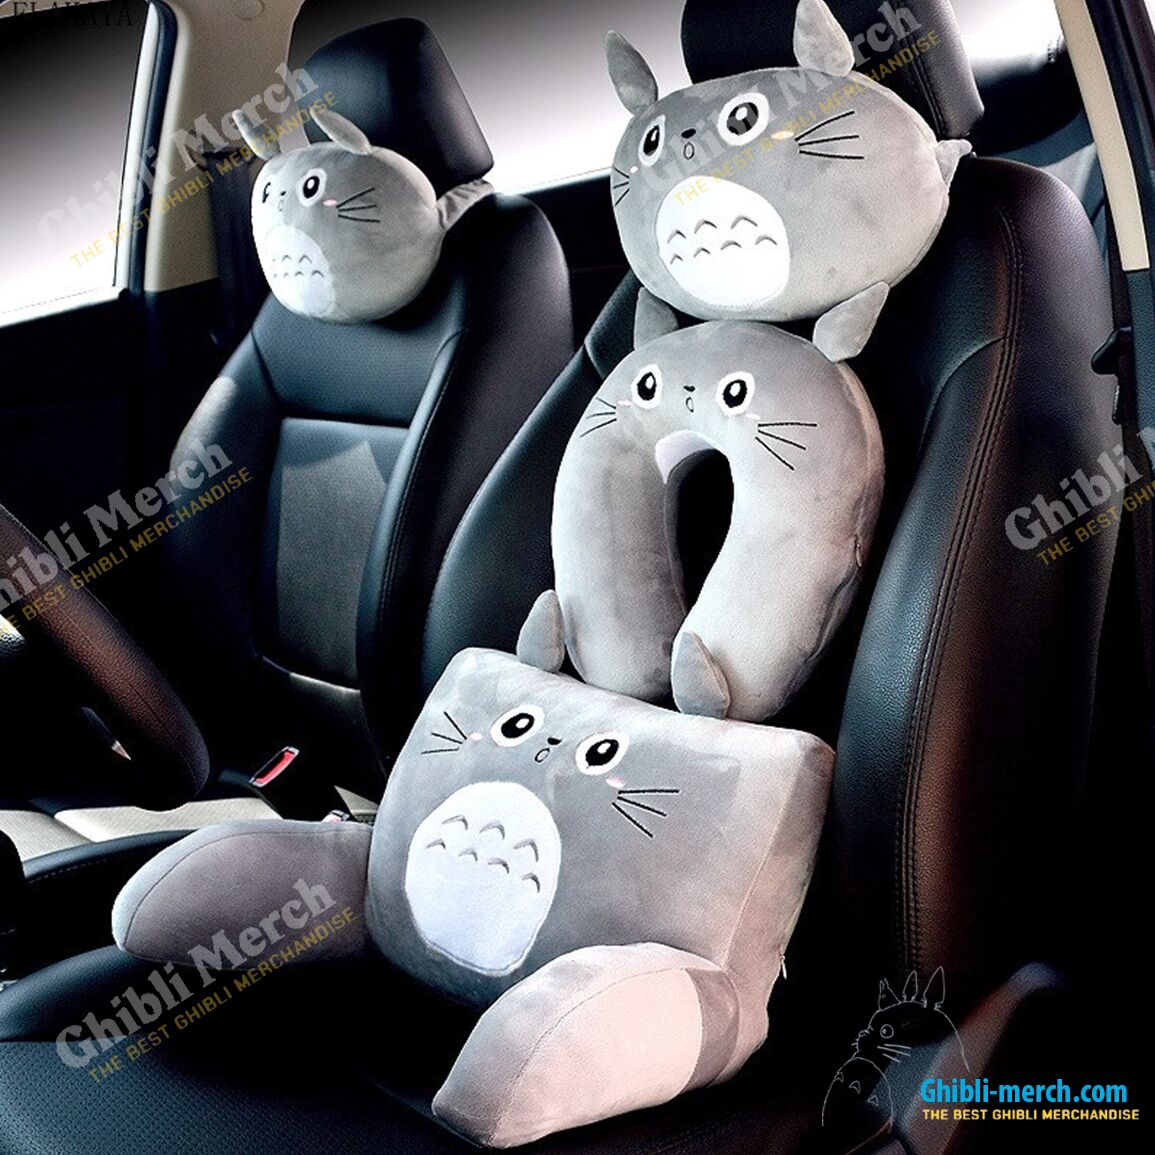 https://ghibli-merch.com/wp-content/uploads/2022/01/Totoro-Plush-U-shaped-Neck-Waist-Head-Protect-Pillow-Car-Seat-Back-Cushion-1-1155x1155.jpg